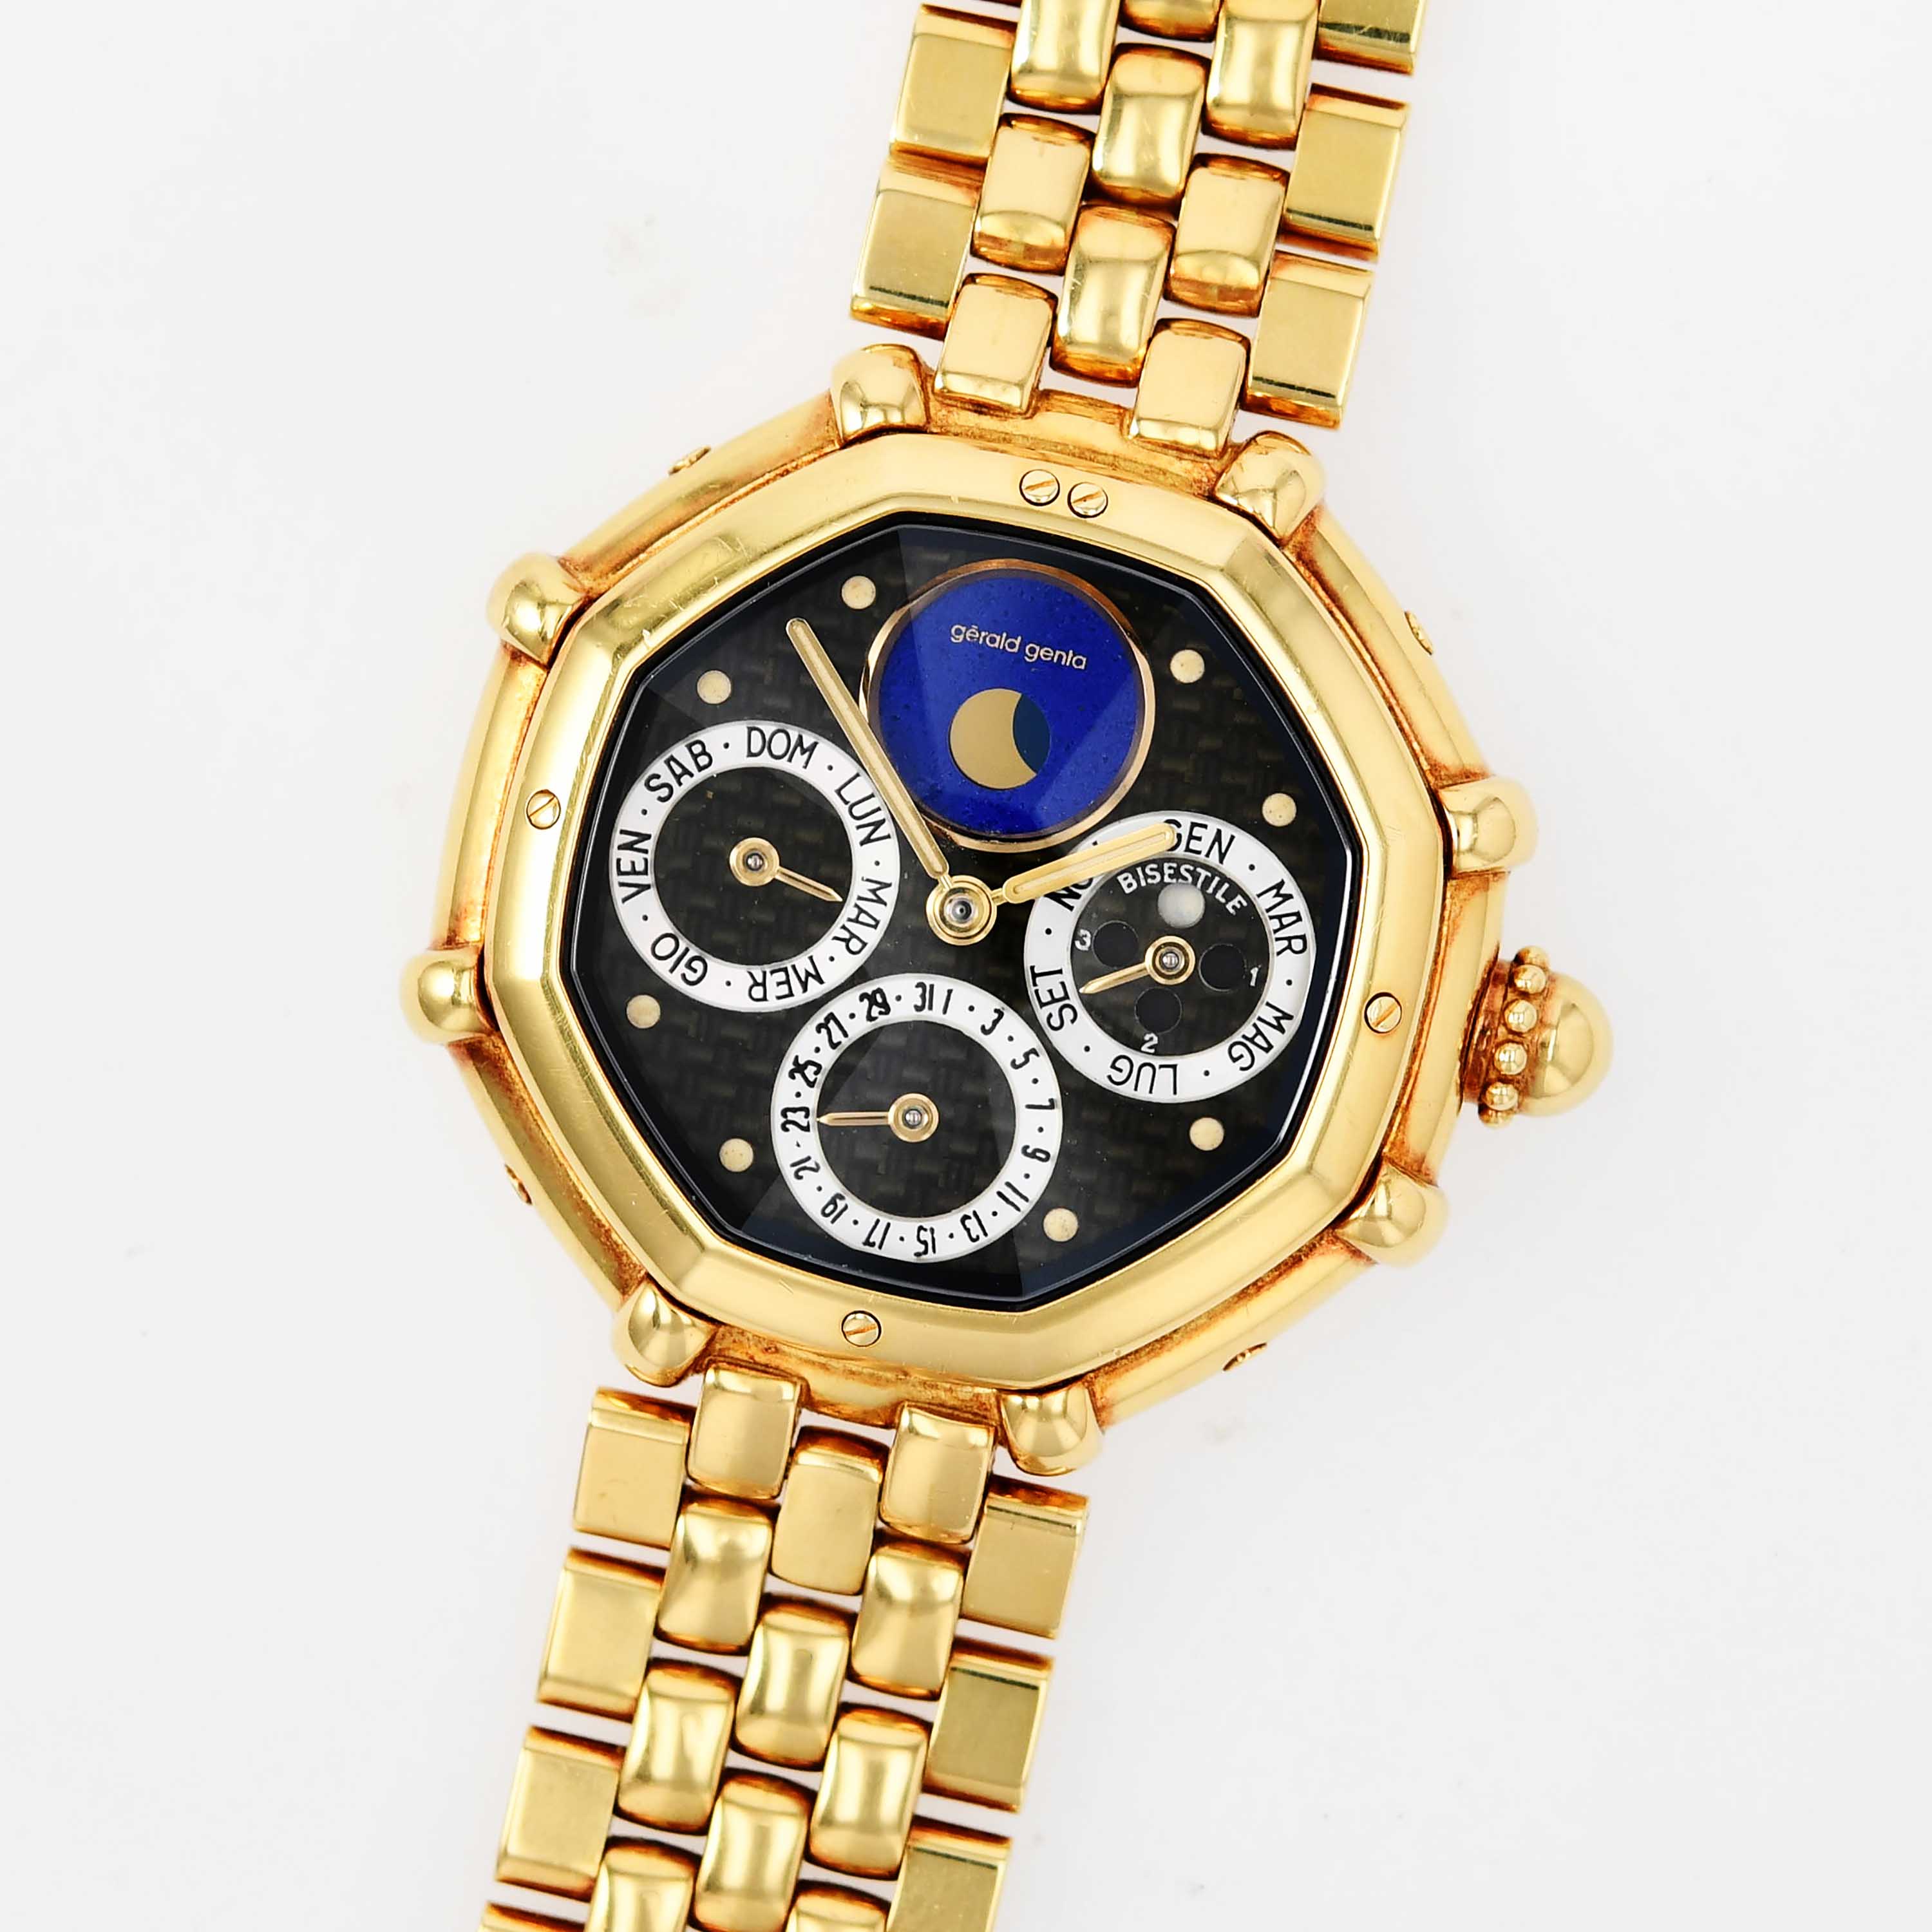 Gerald-genta-success-g33747-automatic-carbon-dial-bracelet-watch-img-main2